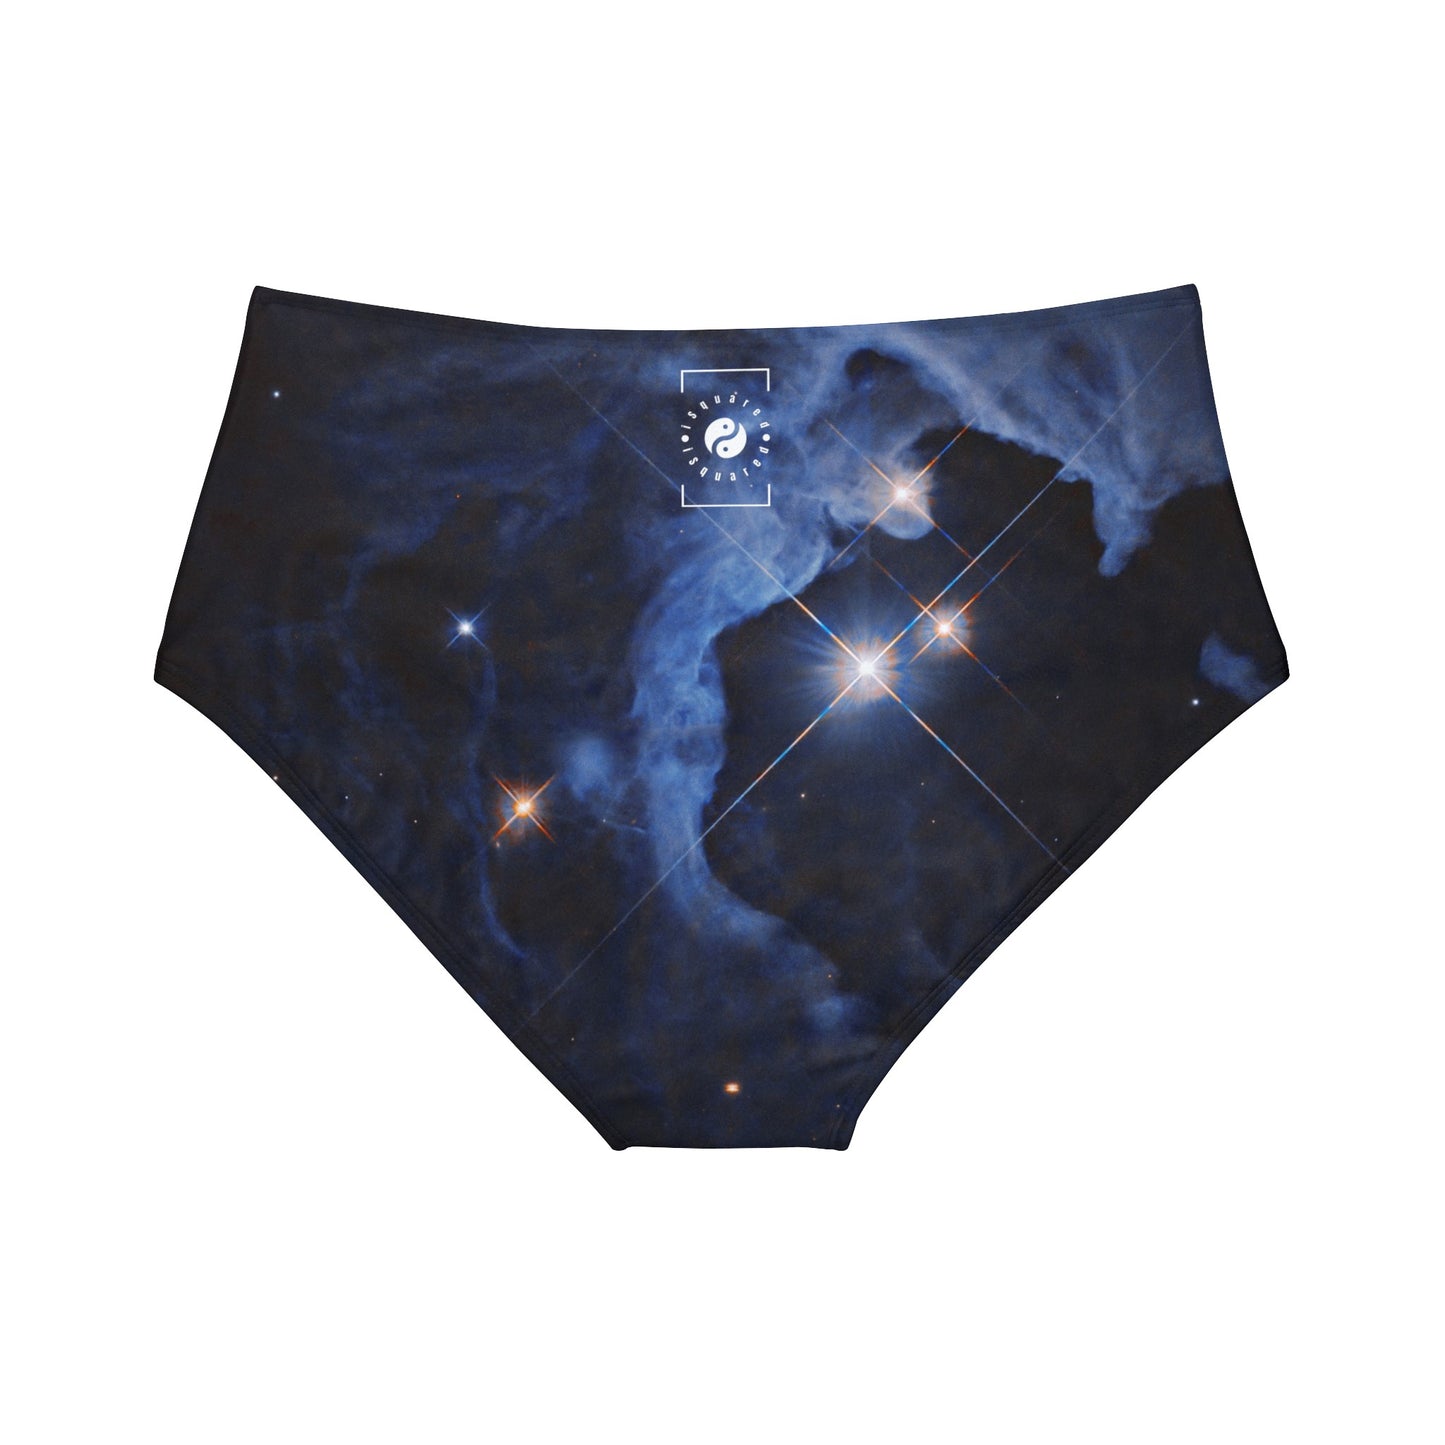 HP Tau, HP Tau G2, and G3 3 star system captured by Hubble - High Waisted Bikini Bottom